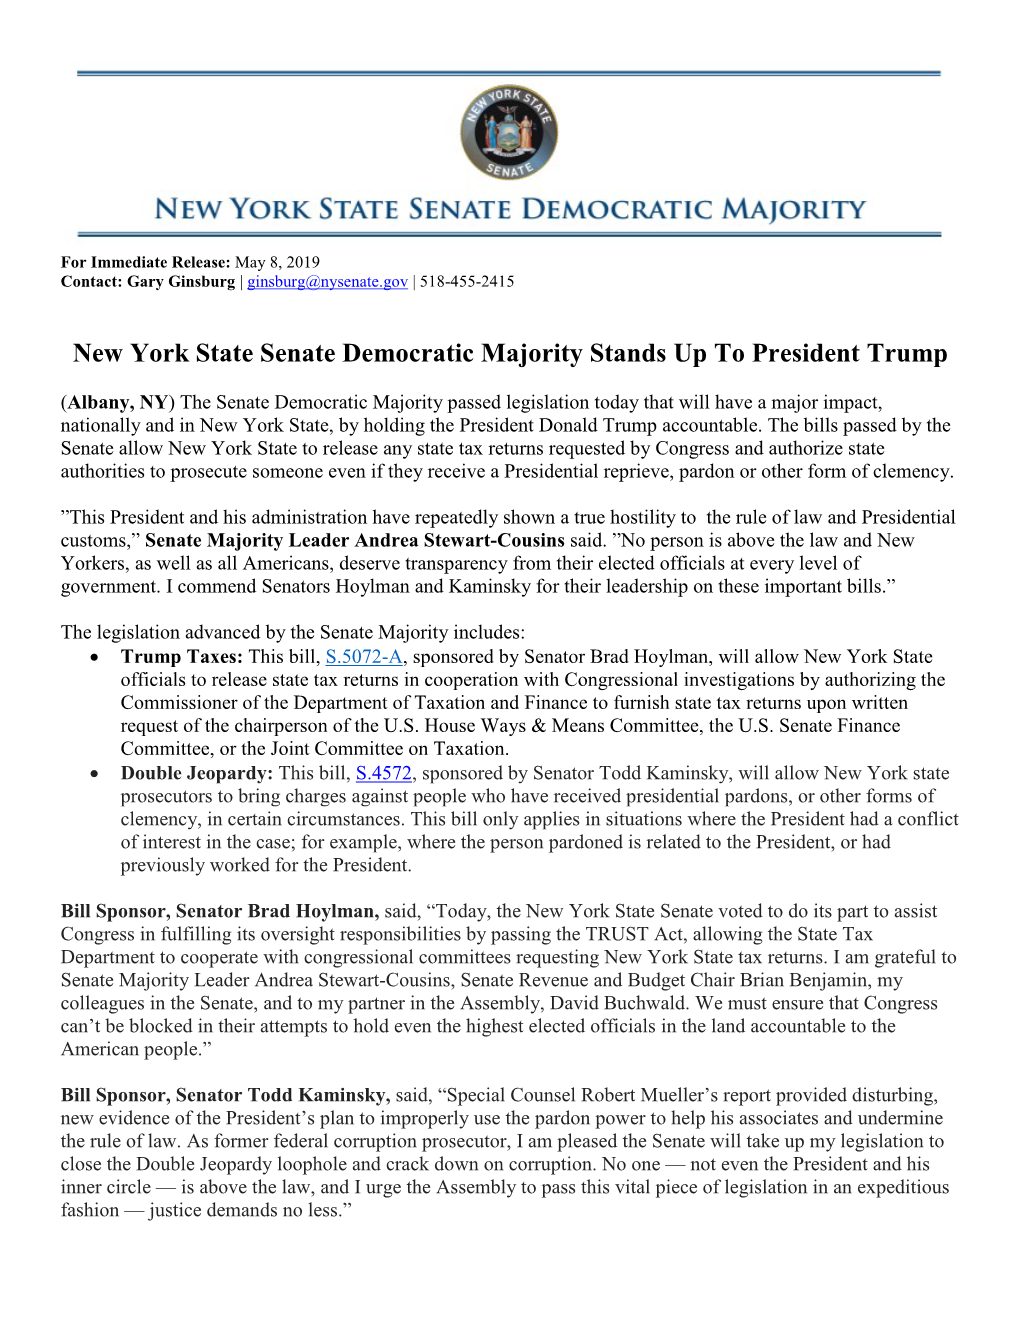 New York State Senate Democratic Majority Stands up to President Trump